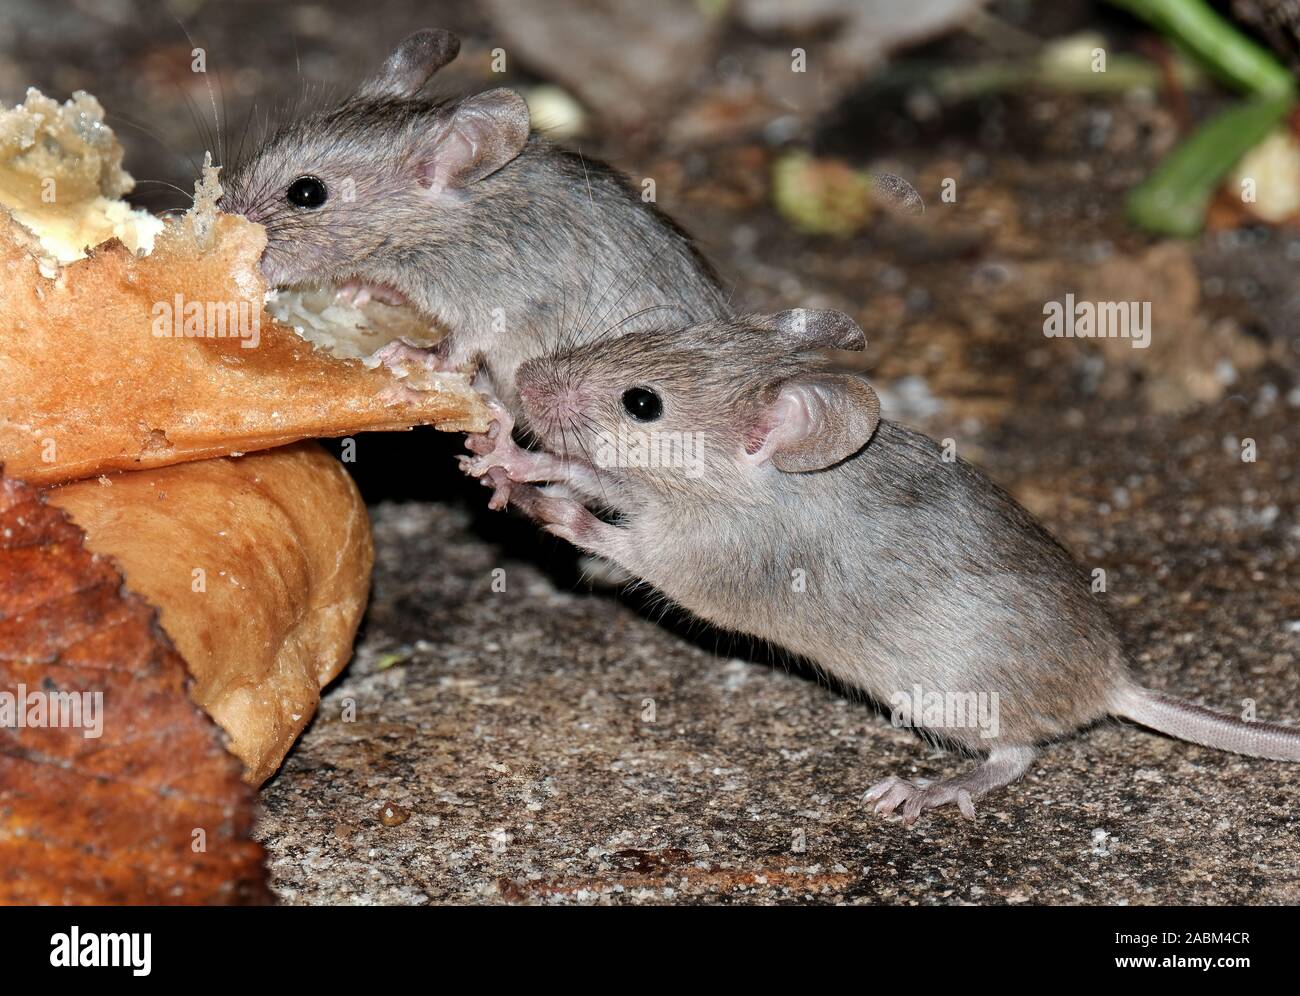 Mice feeding on cake in urban garden. Stock Photo